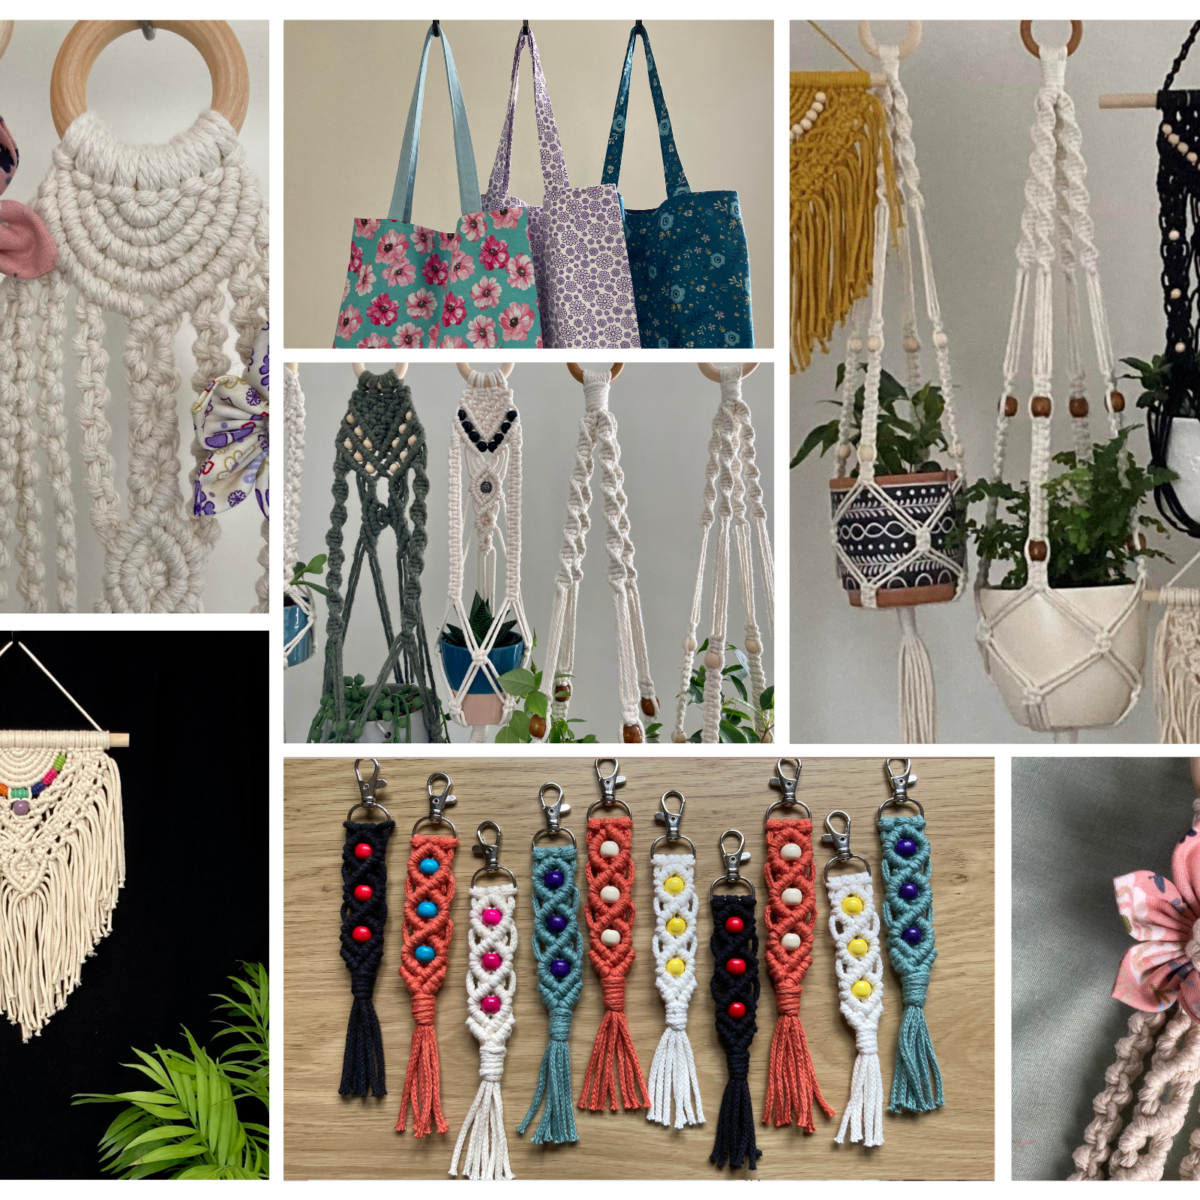 The Many uses of Macrame Wall Hangings - Buy ladies bag online